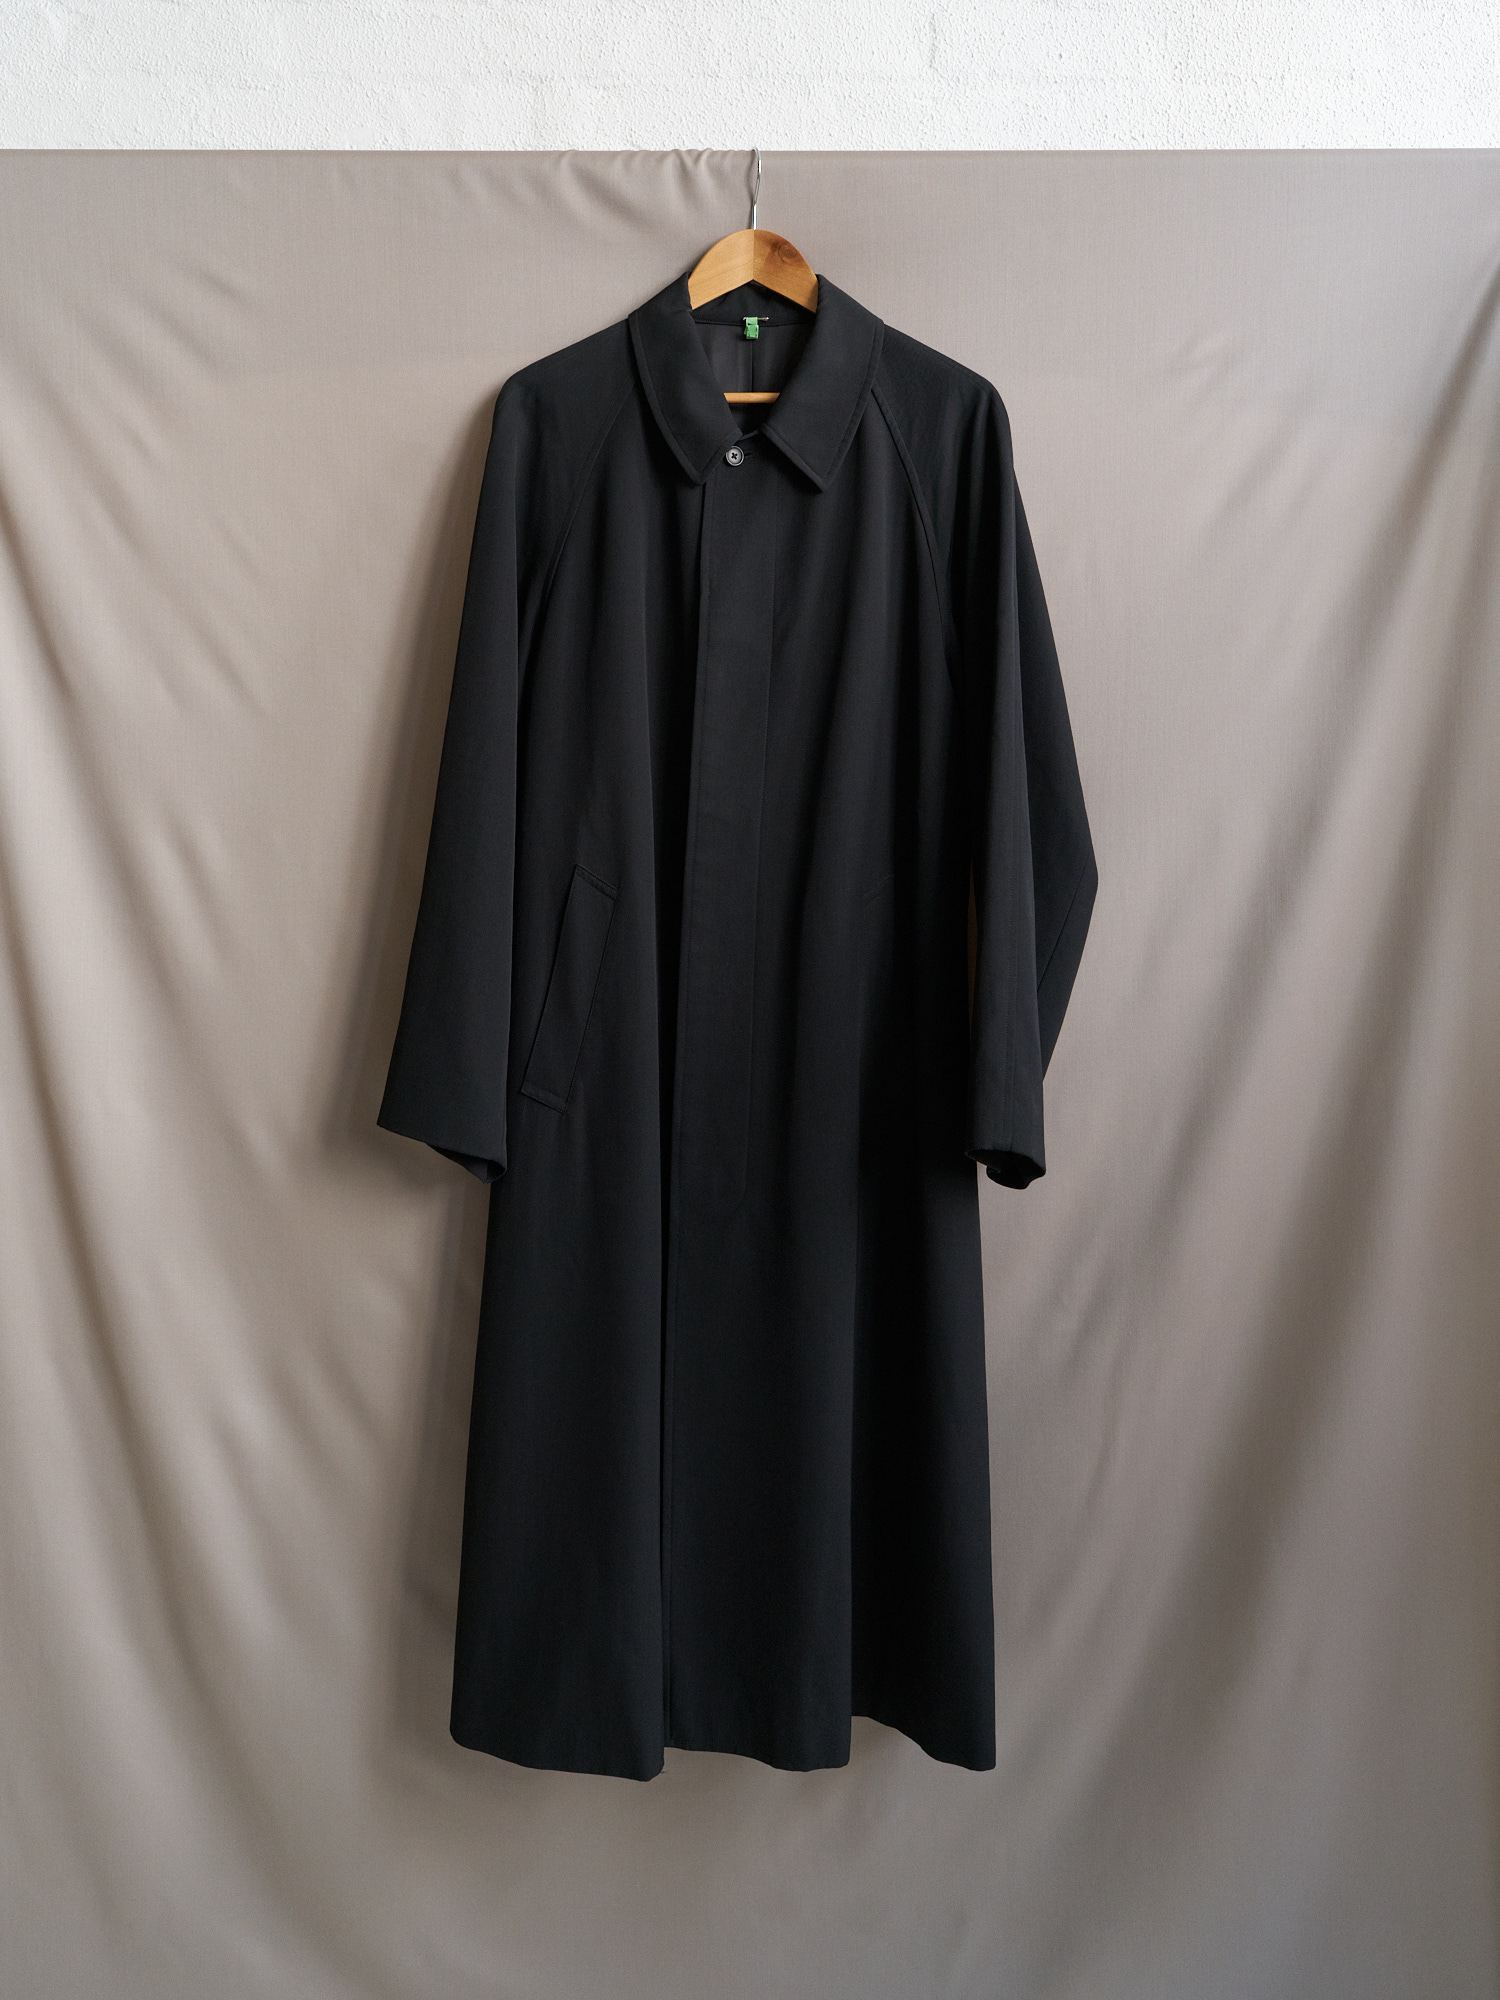 Y's for Men Yohji Yamamoto 1990s black wool gabardine mackintosh coat - sz M L